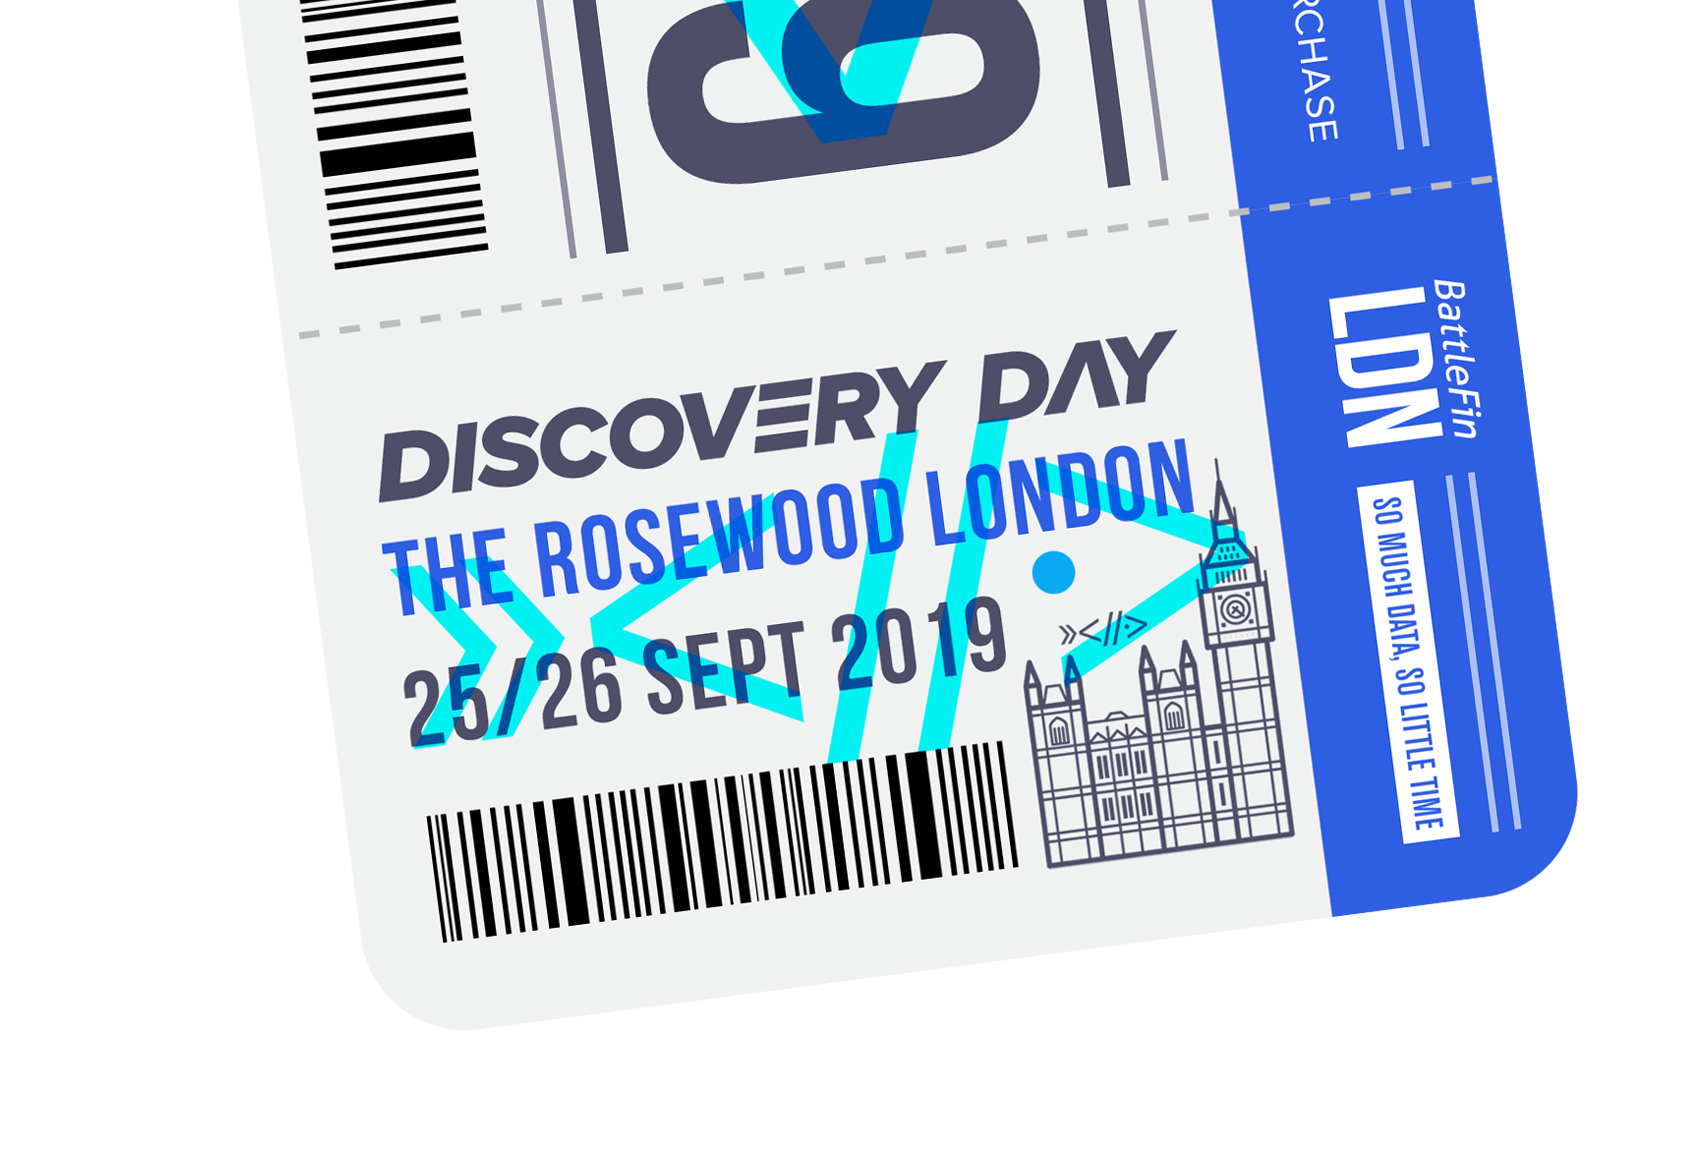 dd-ticket-top-london-rosewood